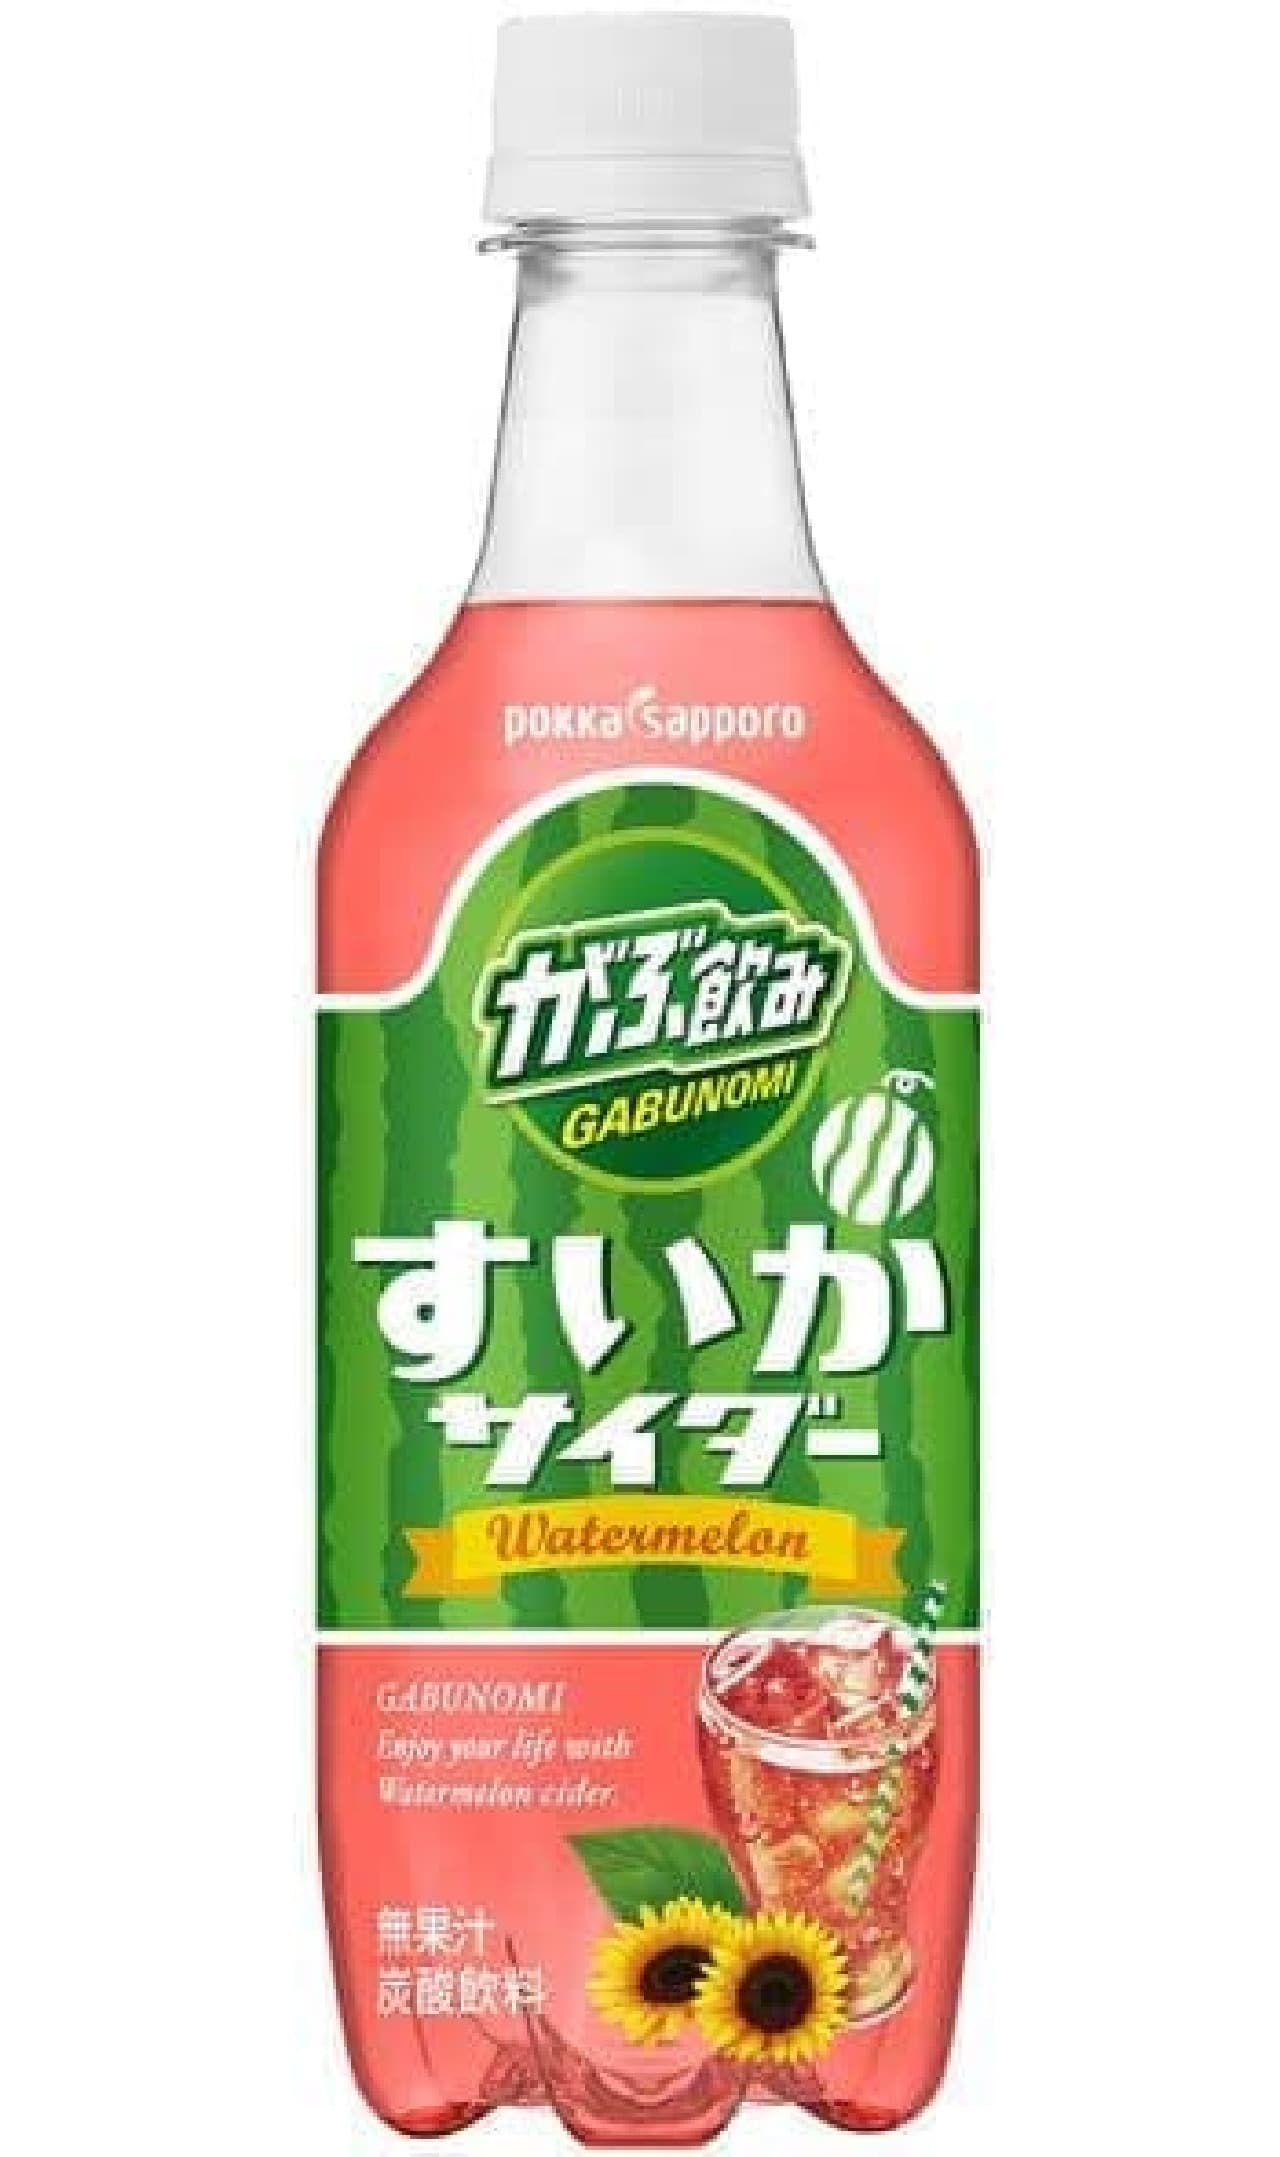 Pokka Sapporo Food & Beverage "Gabu Drinking Watermelon Cider"